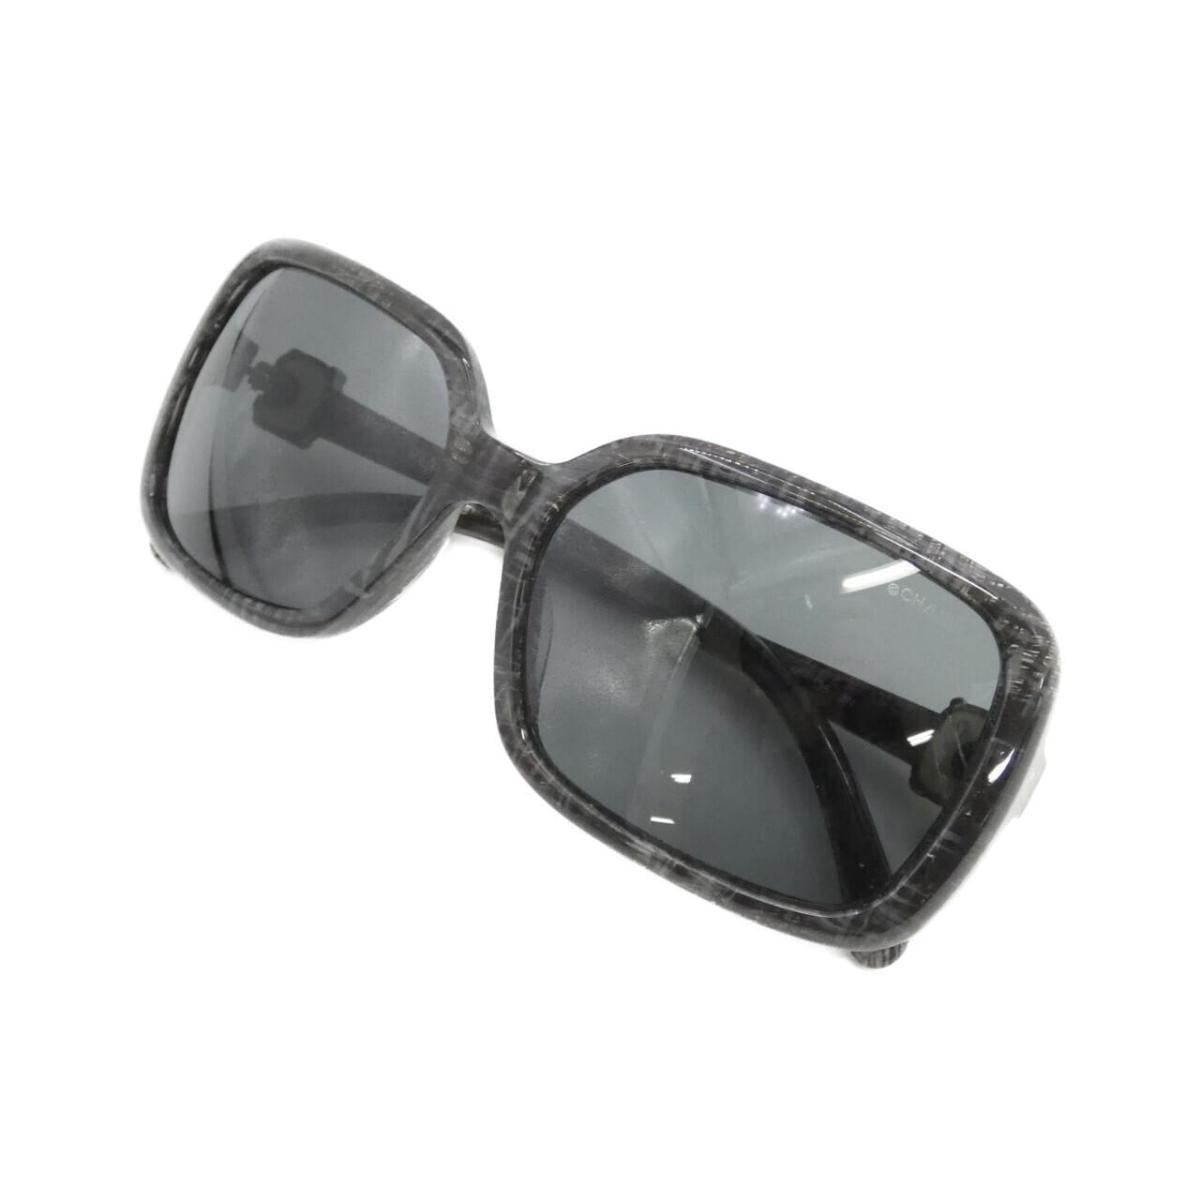 Chanel 5175 Sunglasses